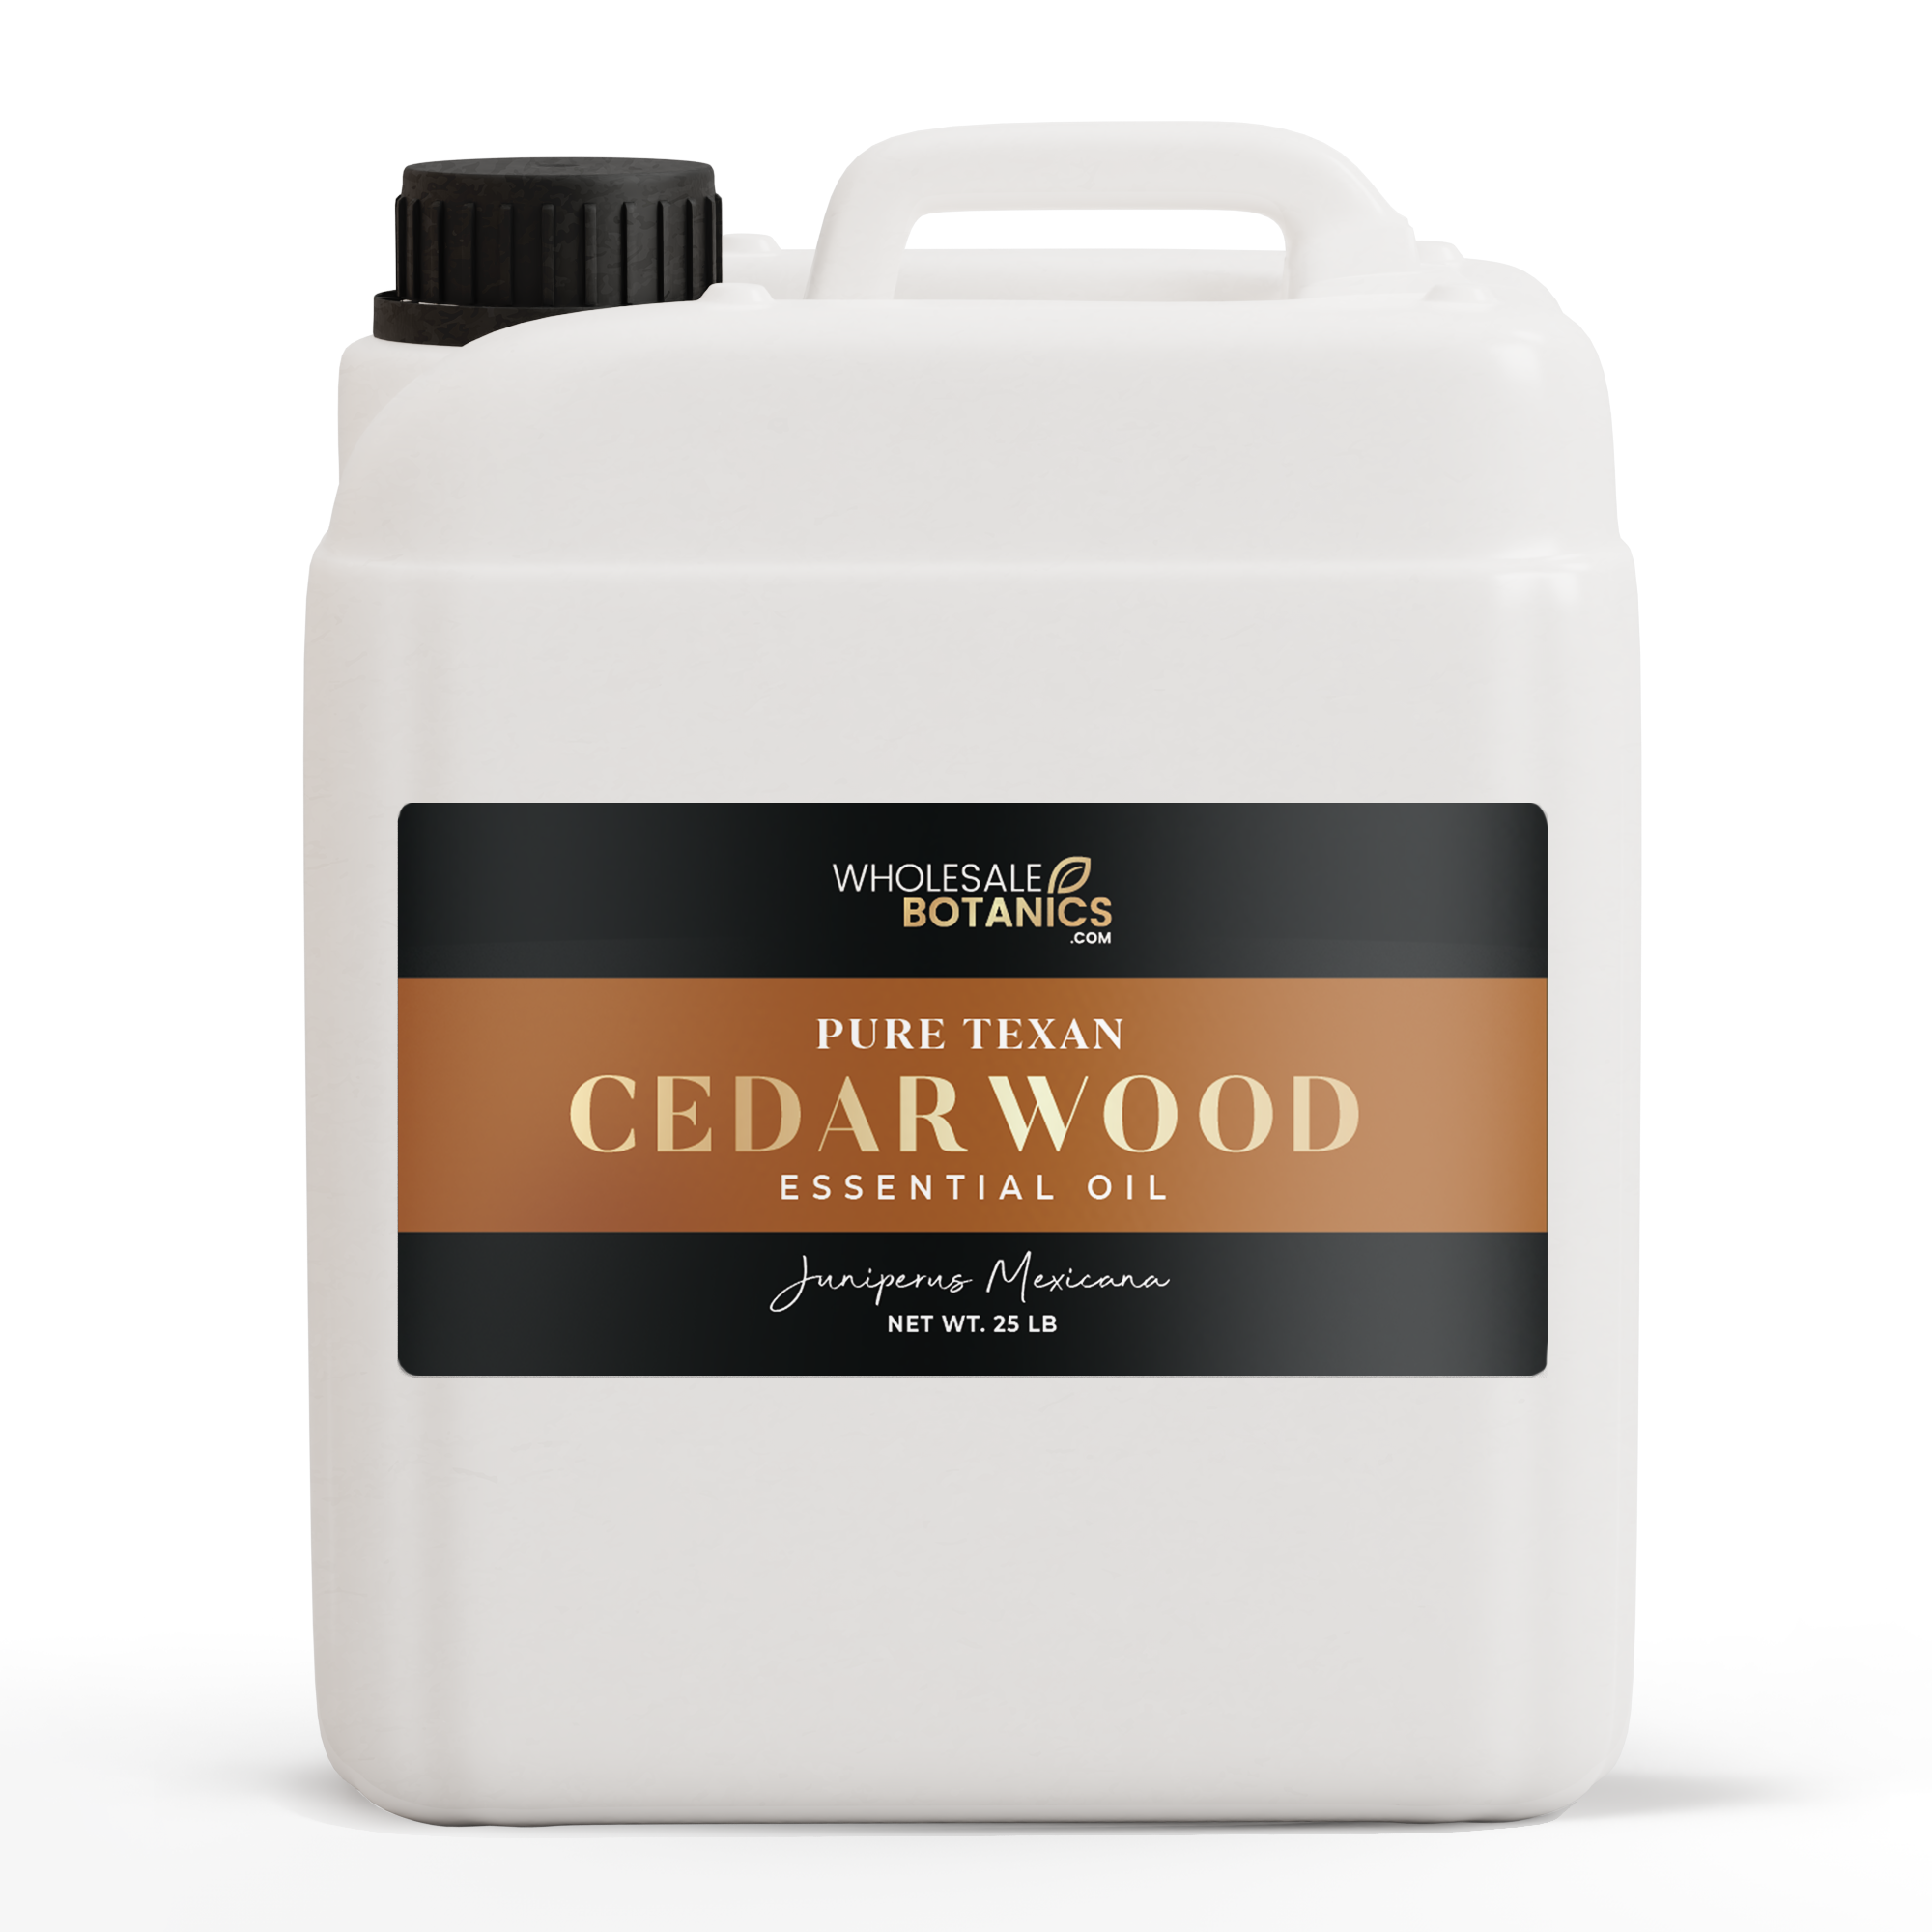 Cedarwood Essential Oil - Purity Texas Cedarwood - 25 lbs